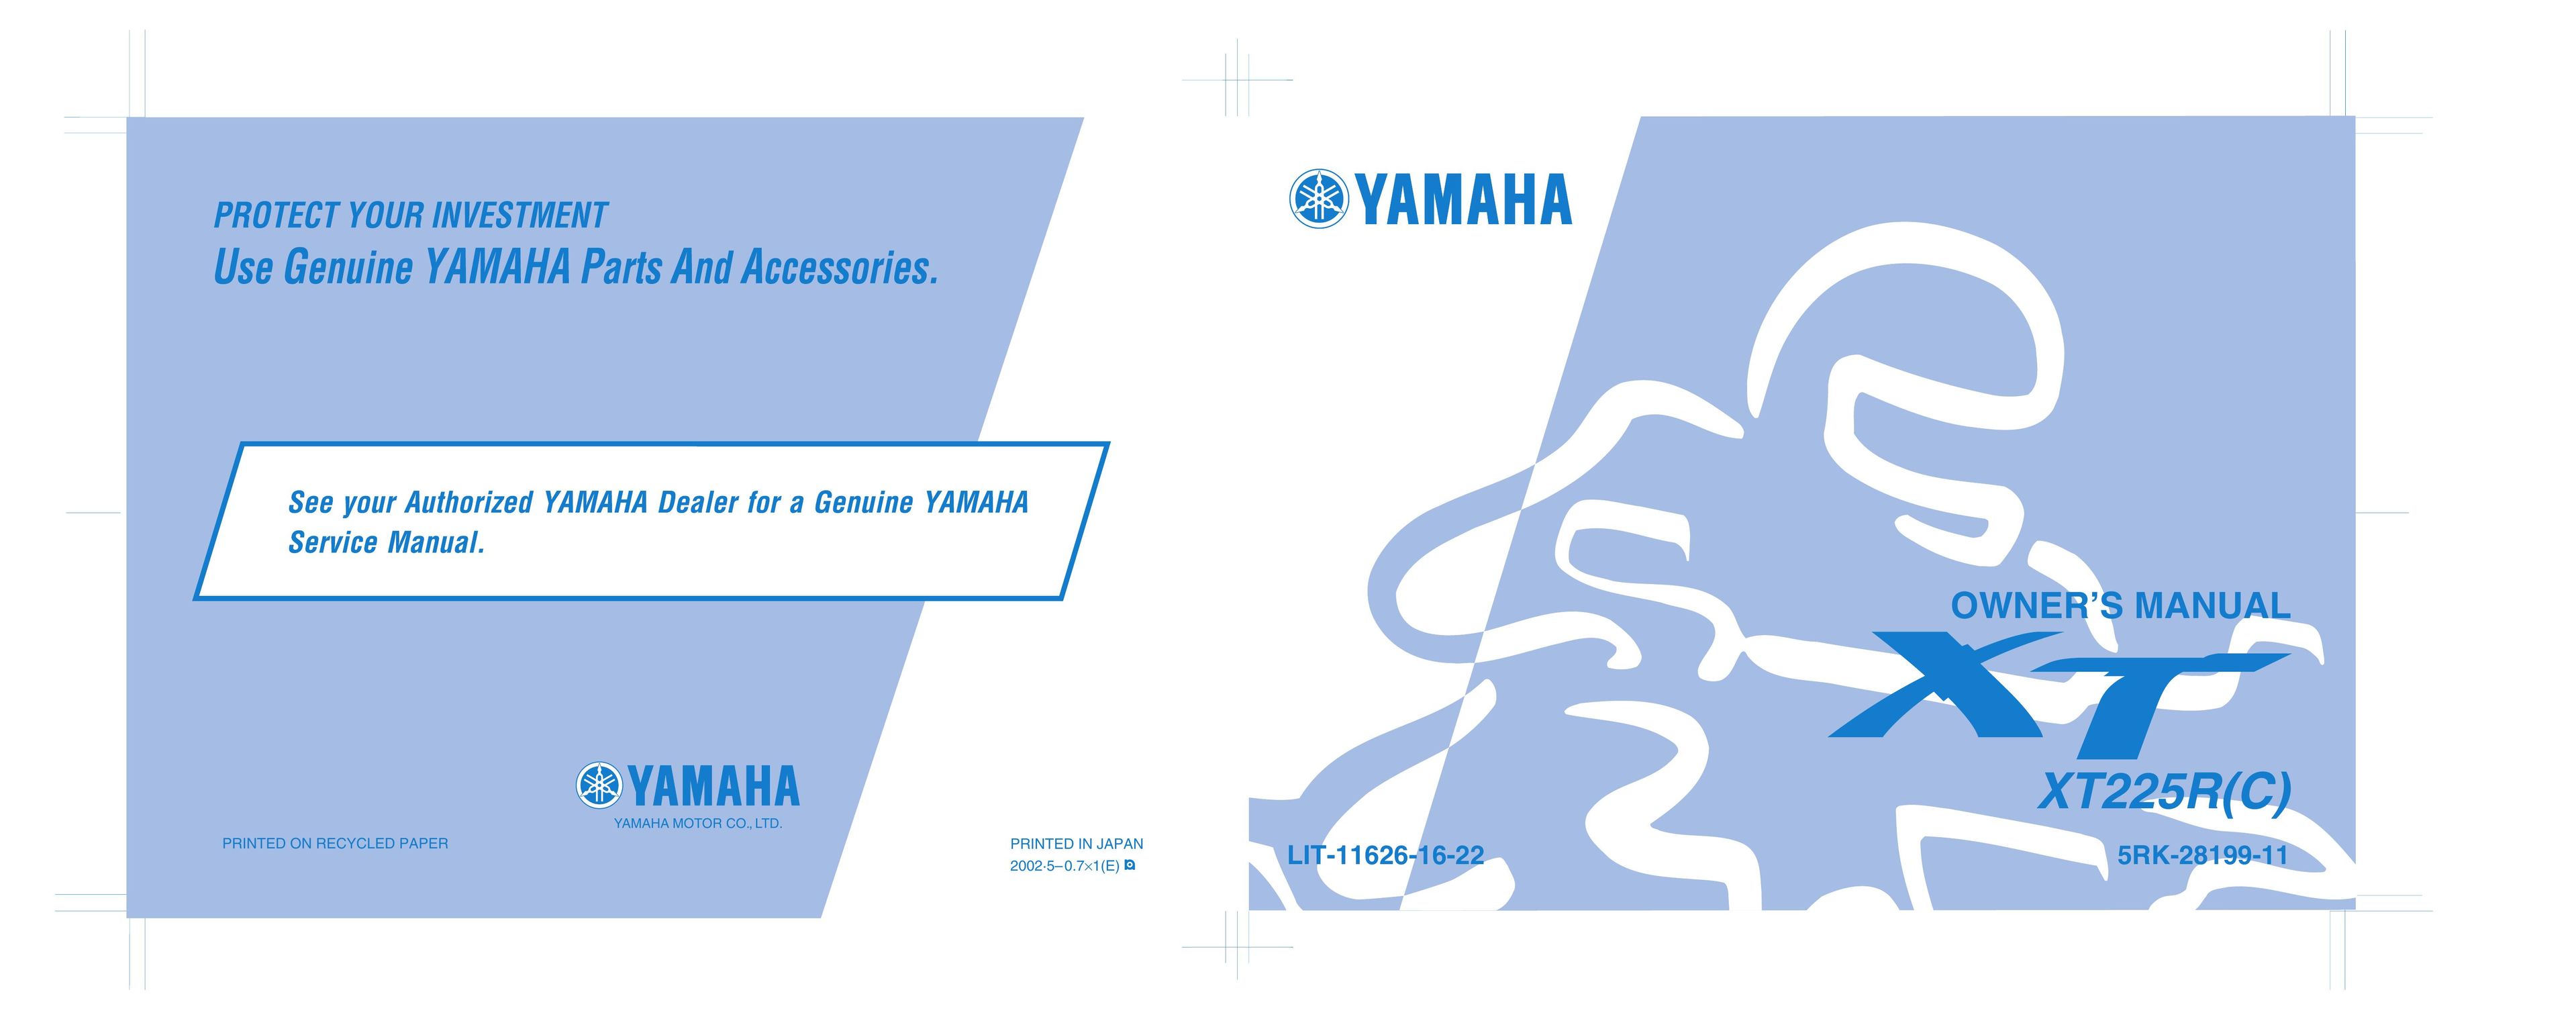 Yamaha XT225R(C) Telephone User Manual